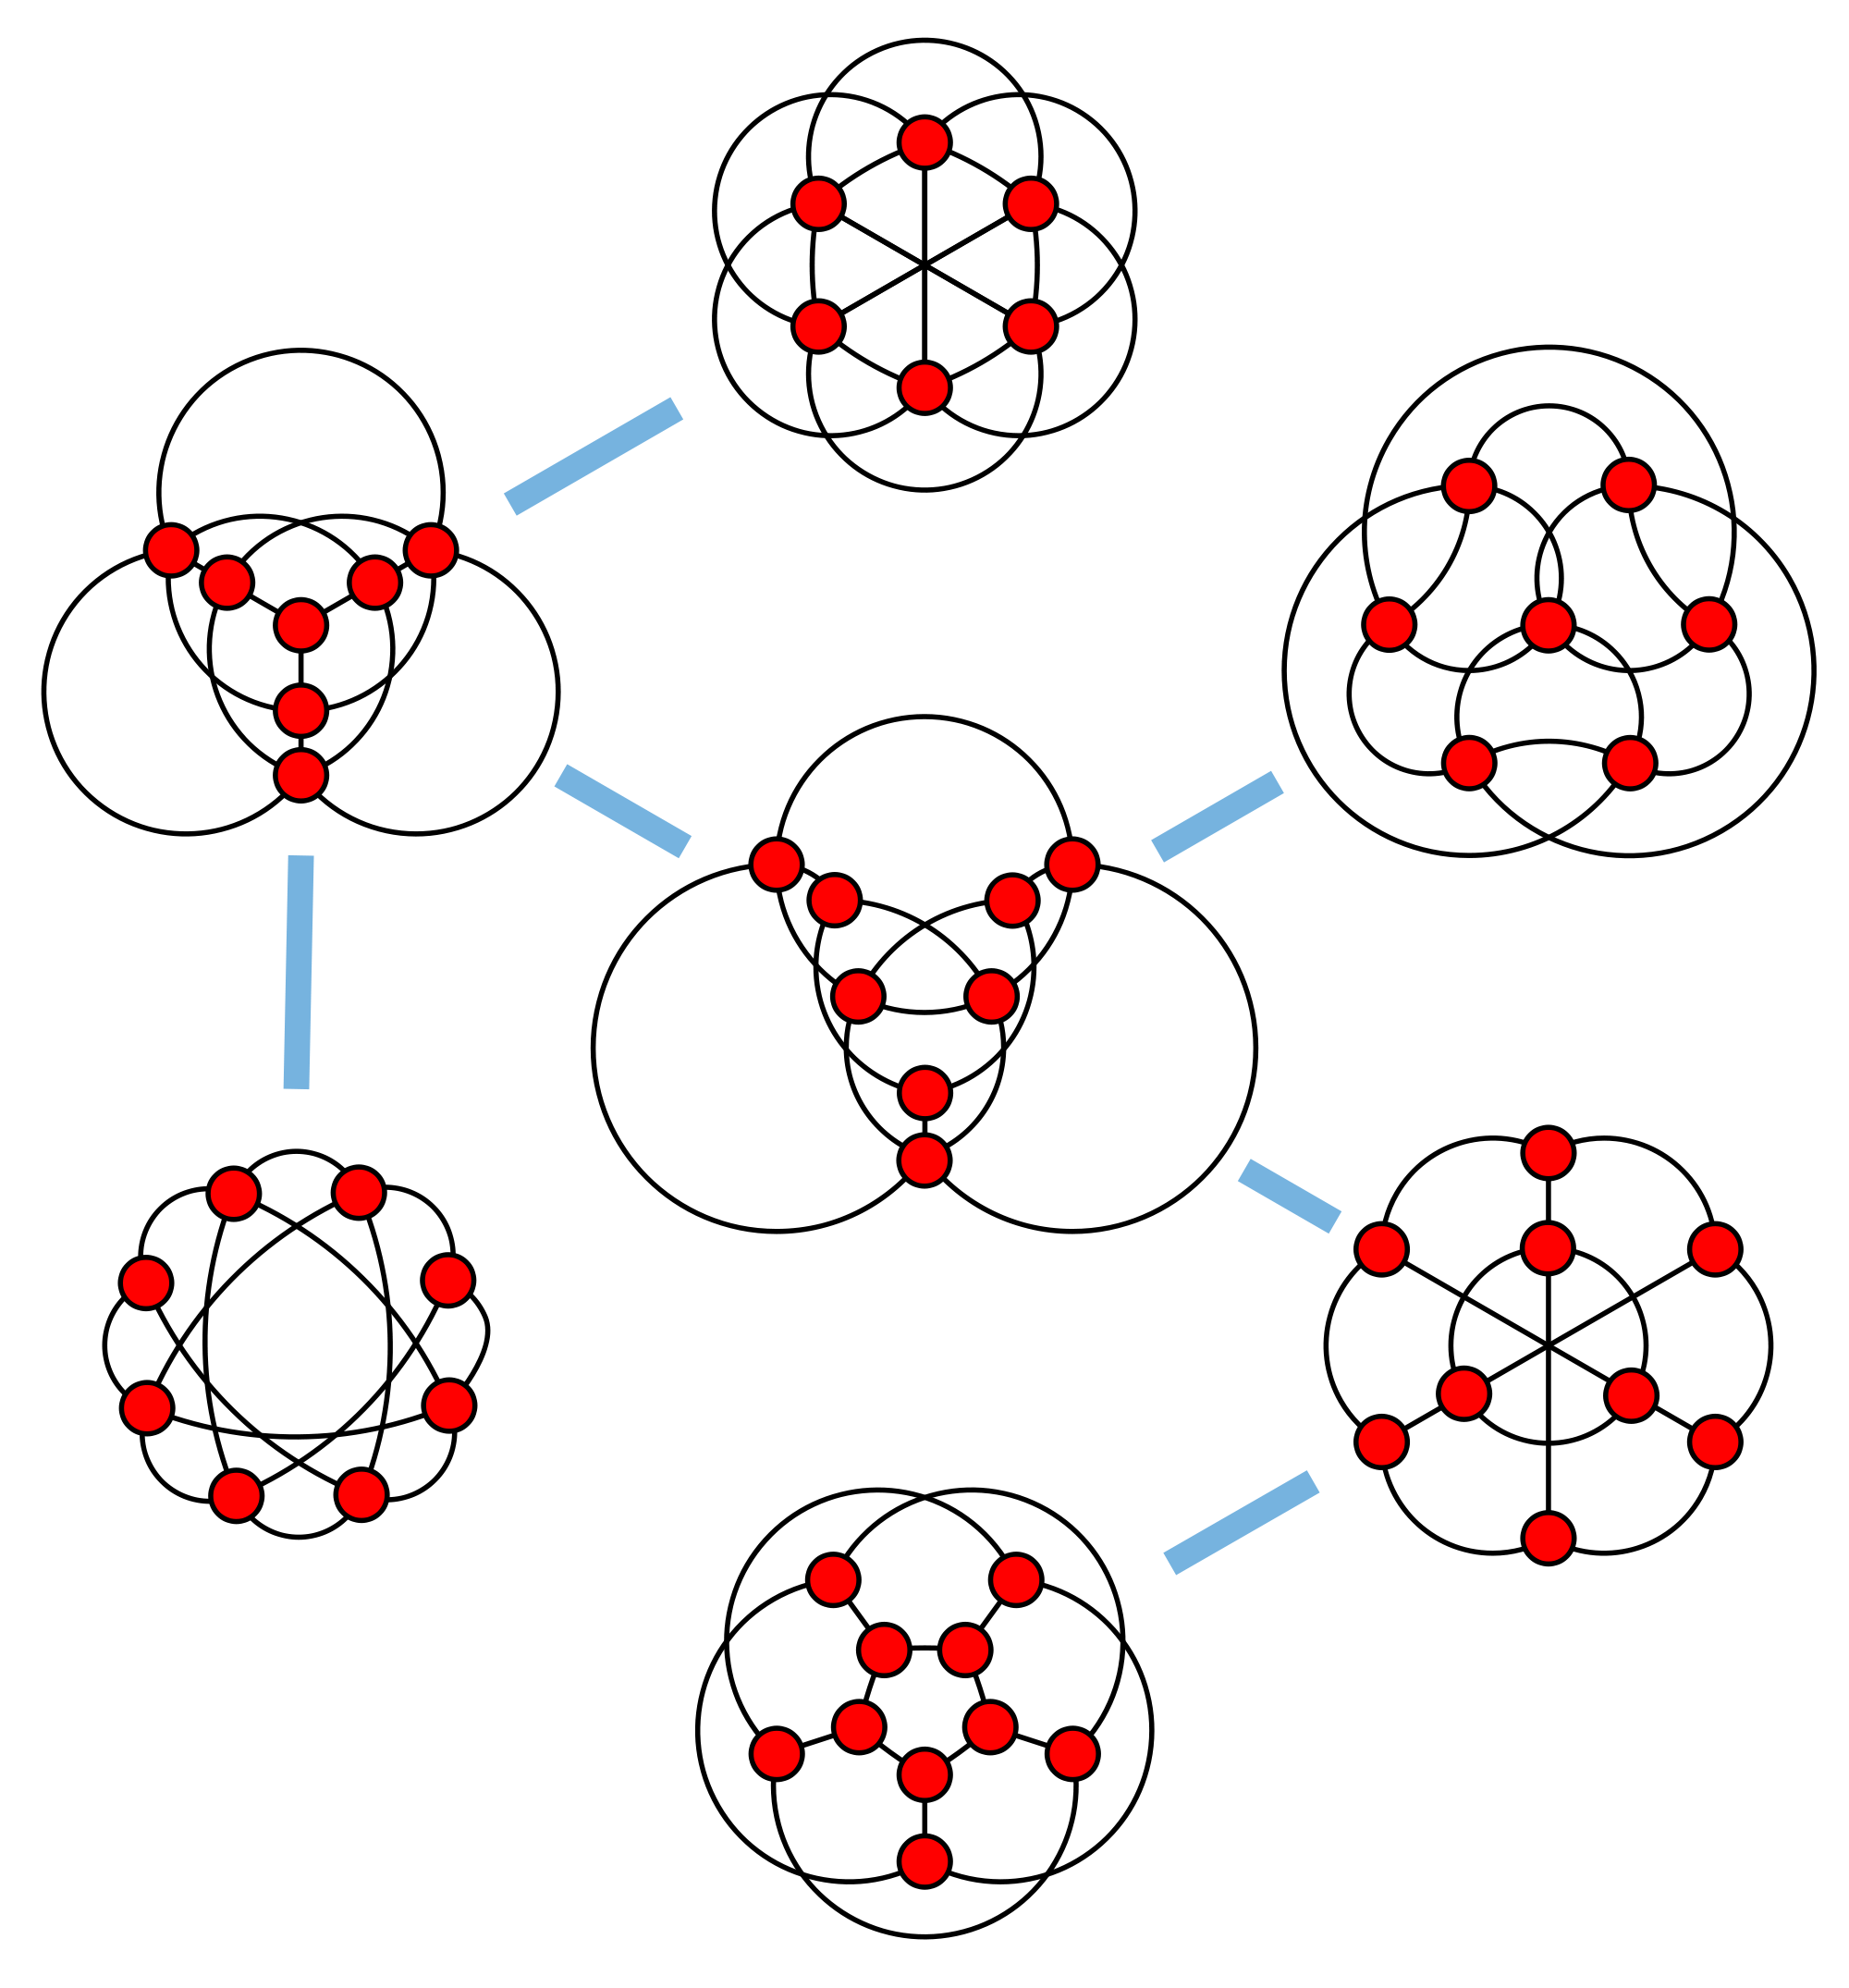 Petersen graphs